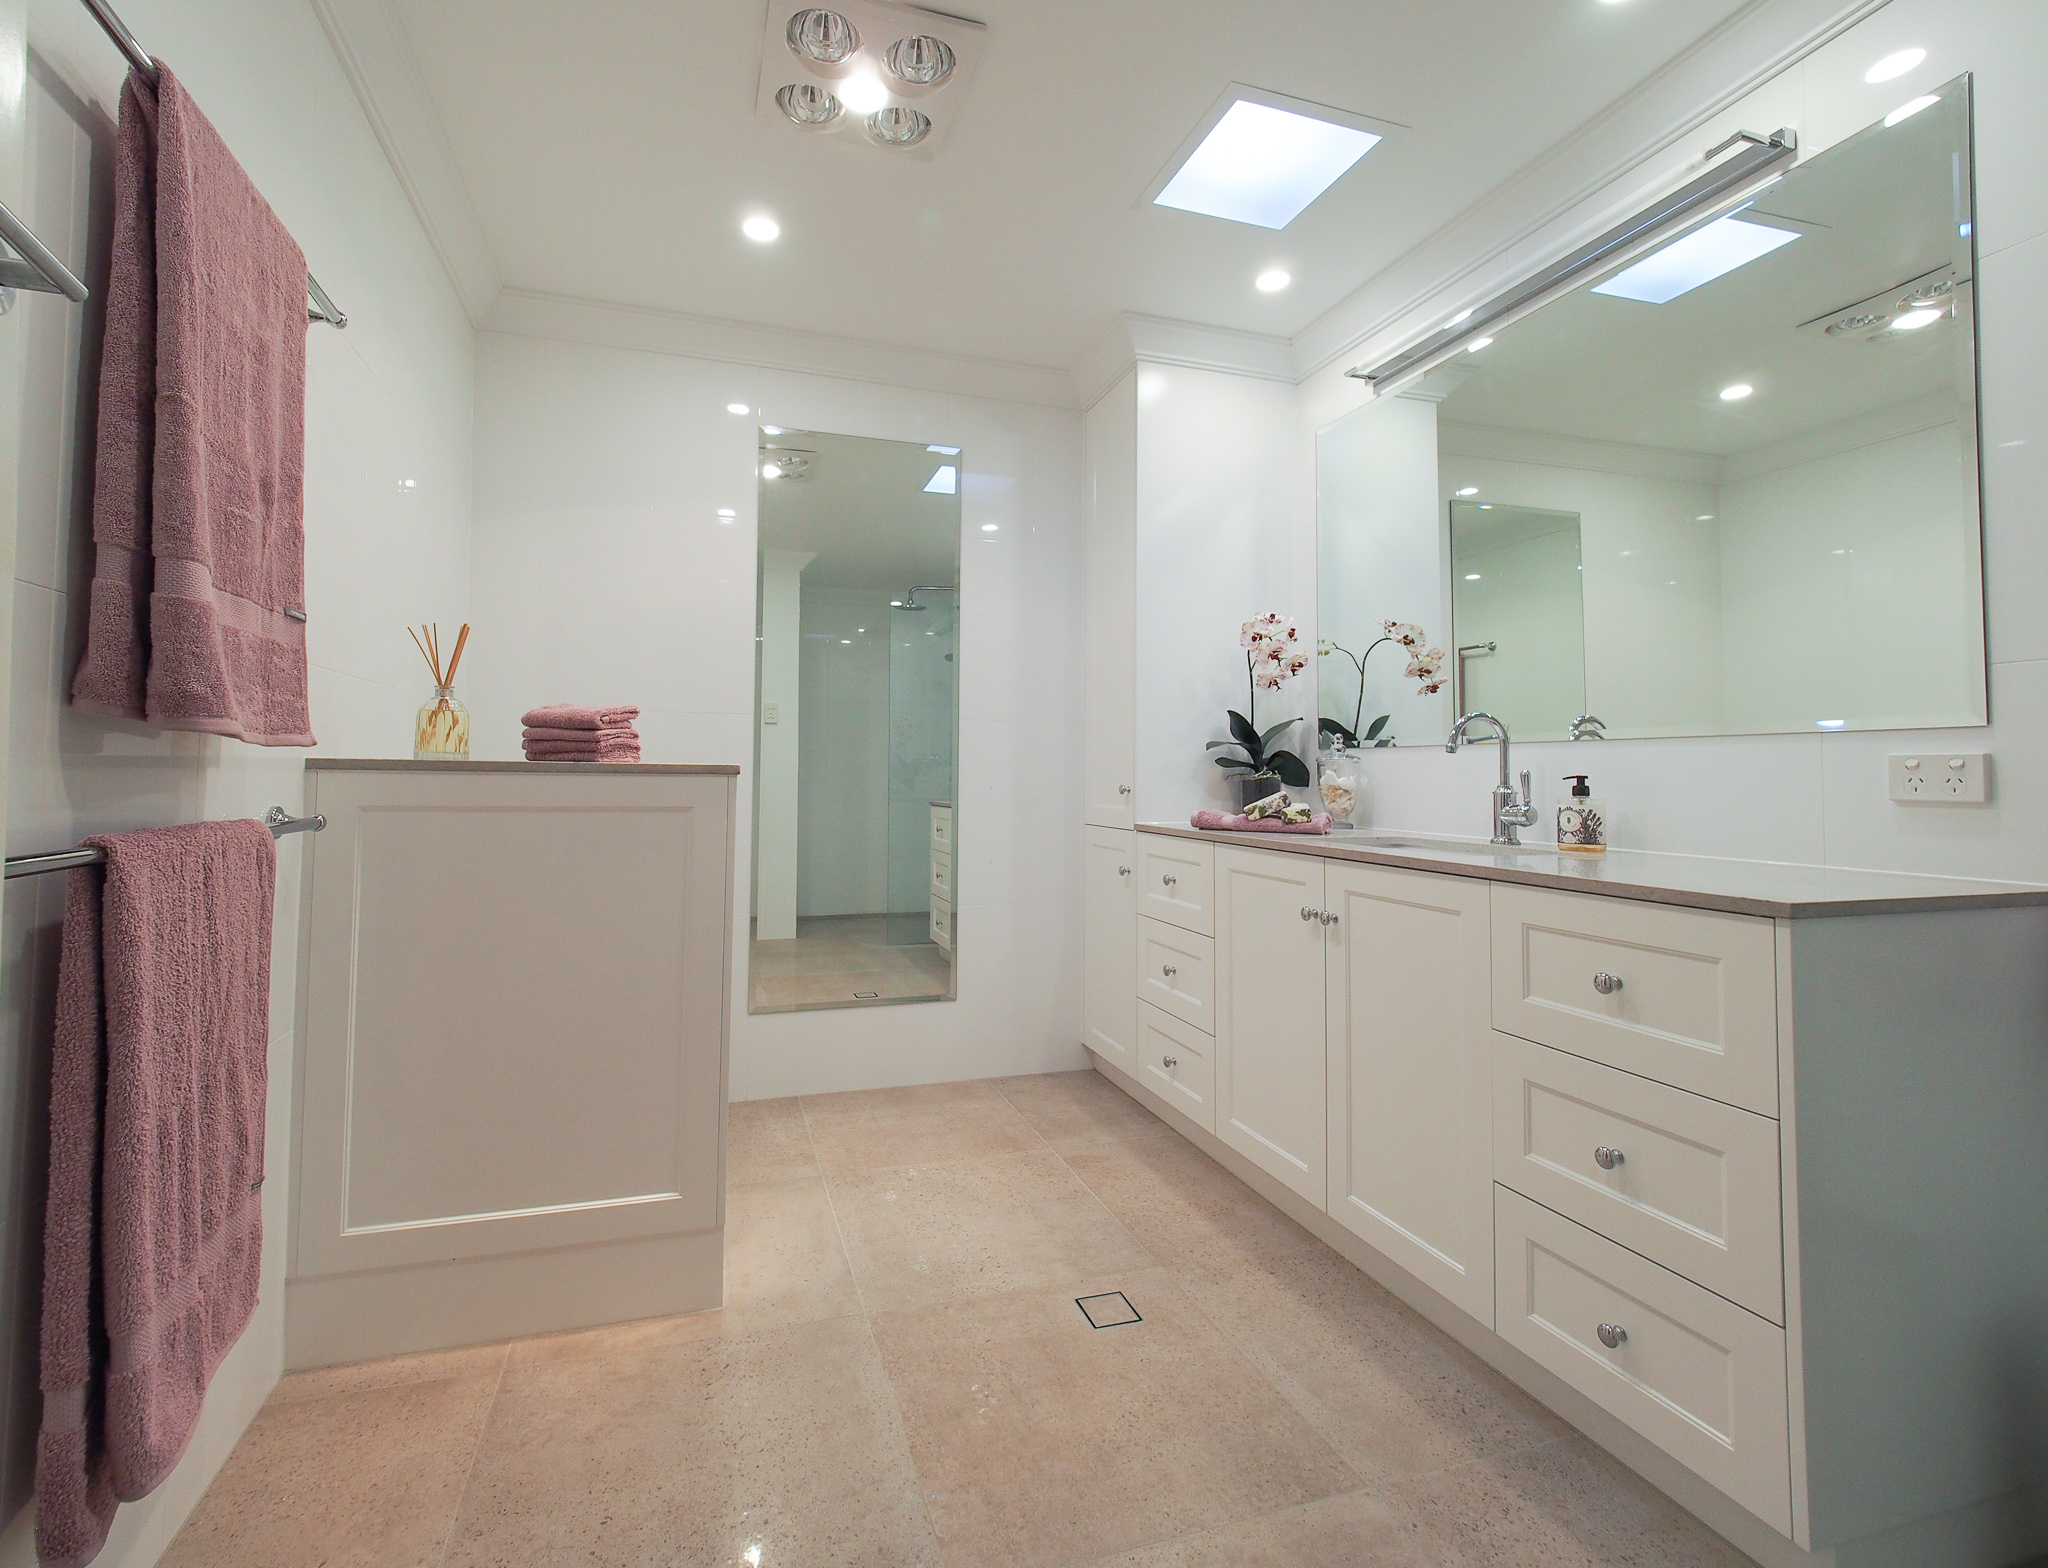 Bathroom wide angle - nib wall to conceal toilet suite, full-length mirror, custom vanity and linen cupboard